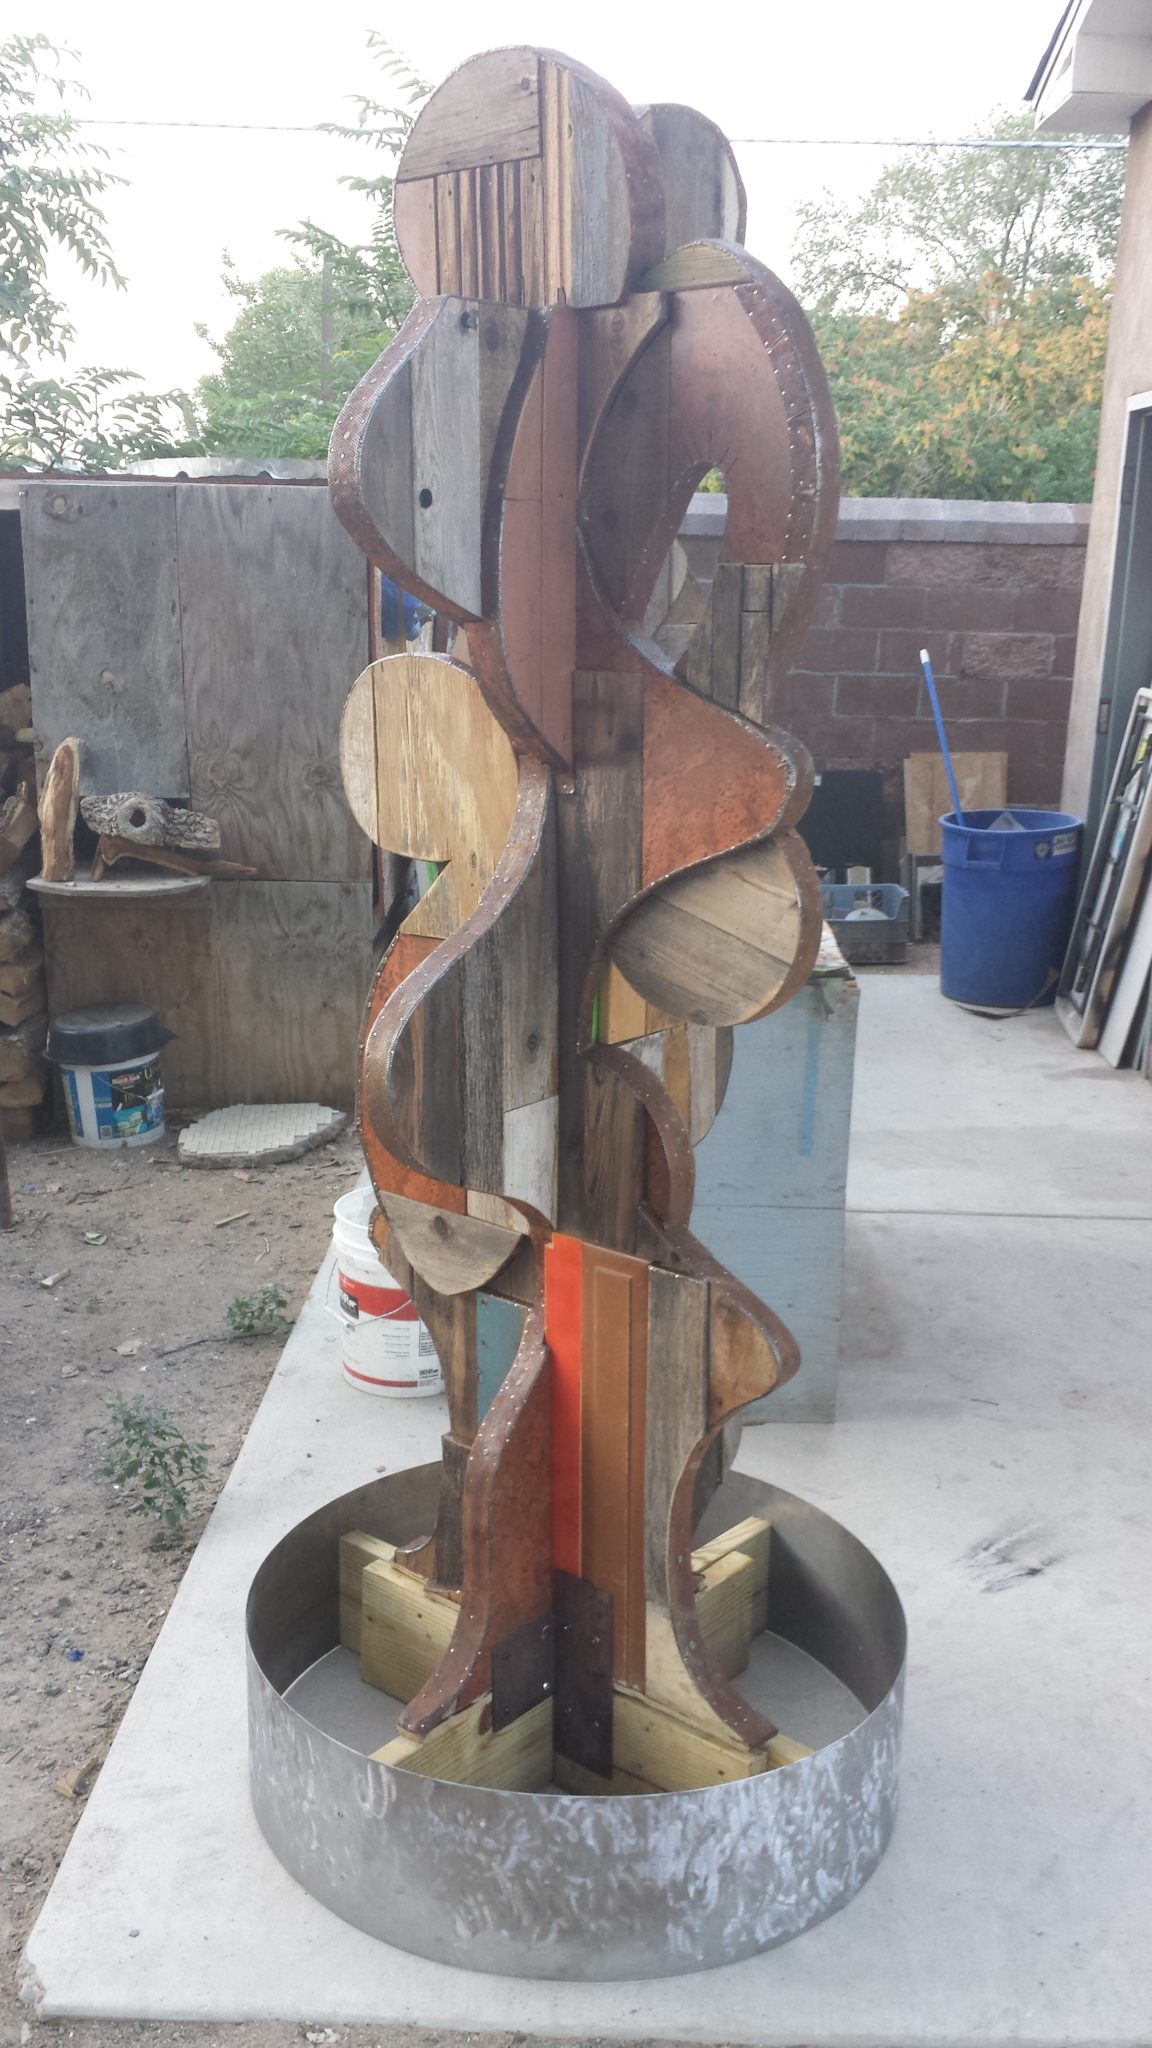 Joel Davis Art - wood sculpture - May 2015